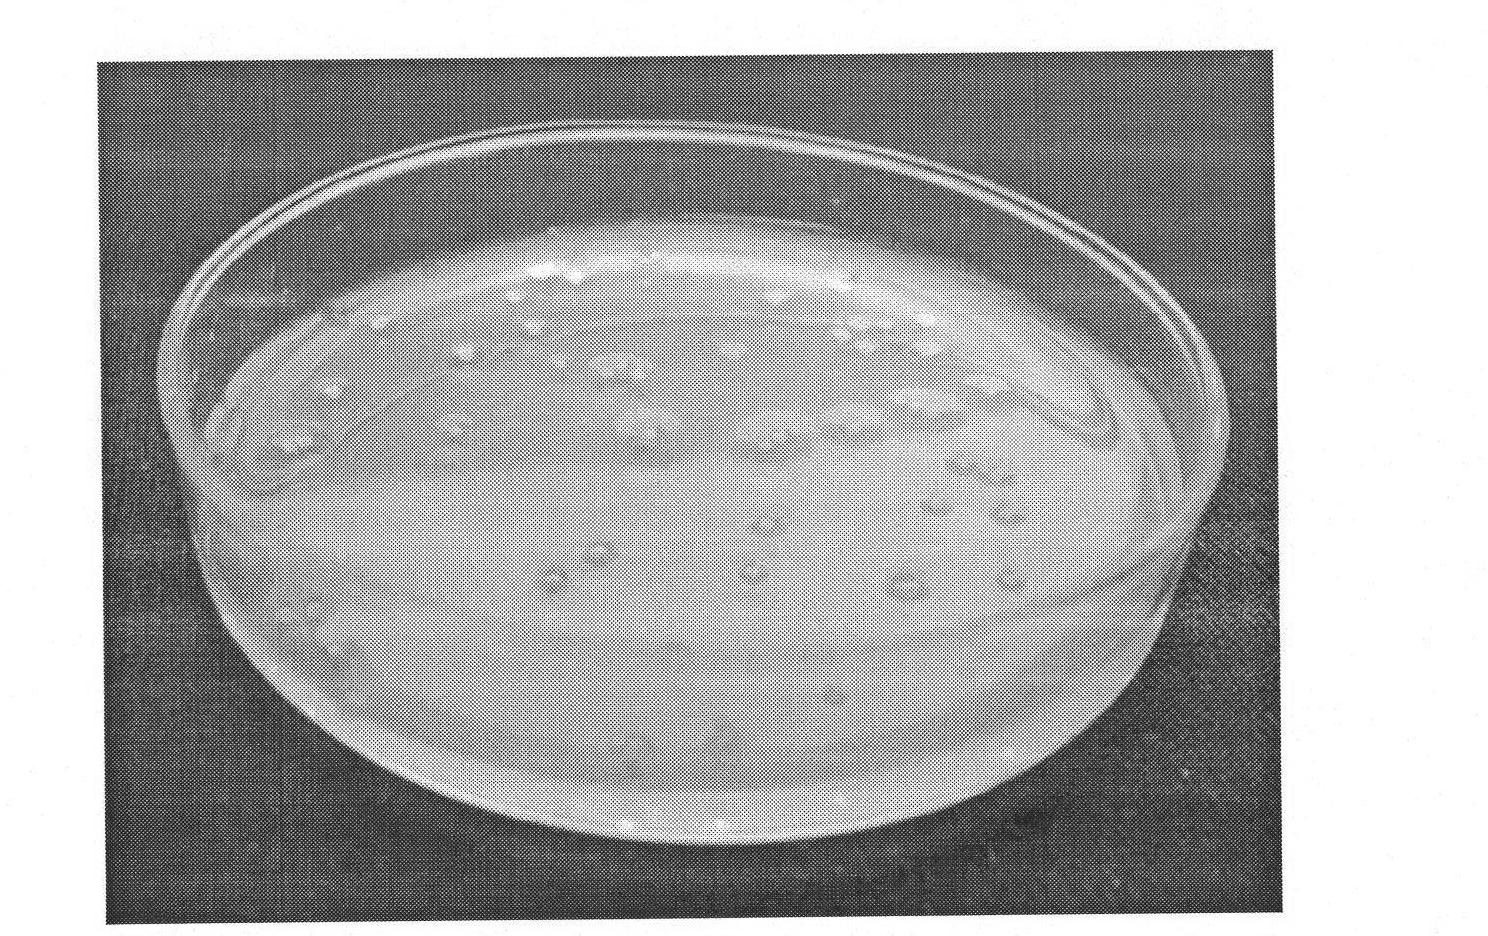 Roseobactersp.zjut and application thereof in preparation of agaro-oligosaccharide